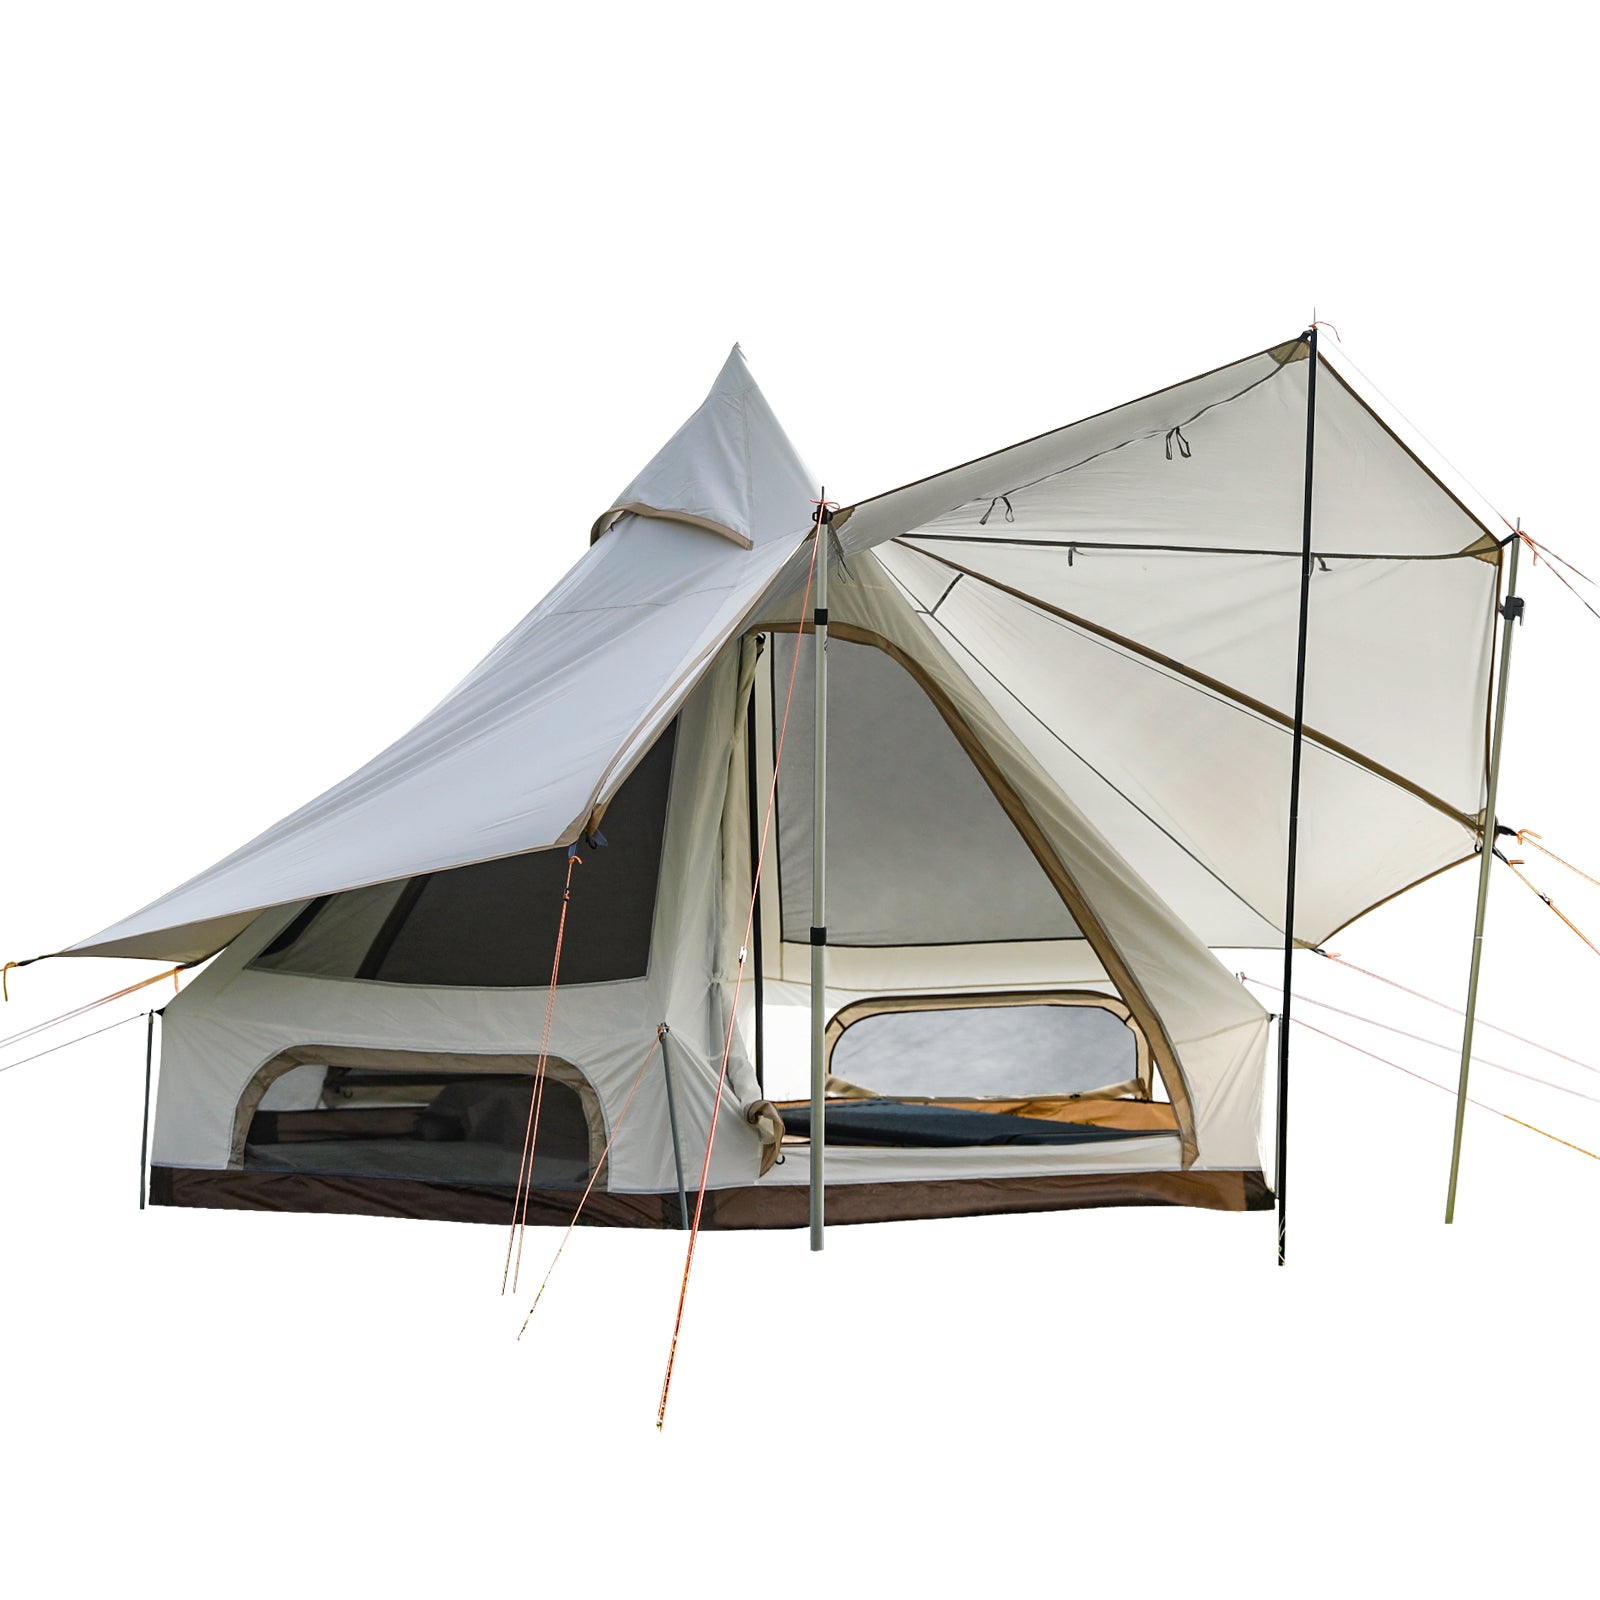 KingCamp ANIZO S 320 Double Layered Teepee Tent